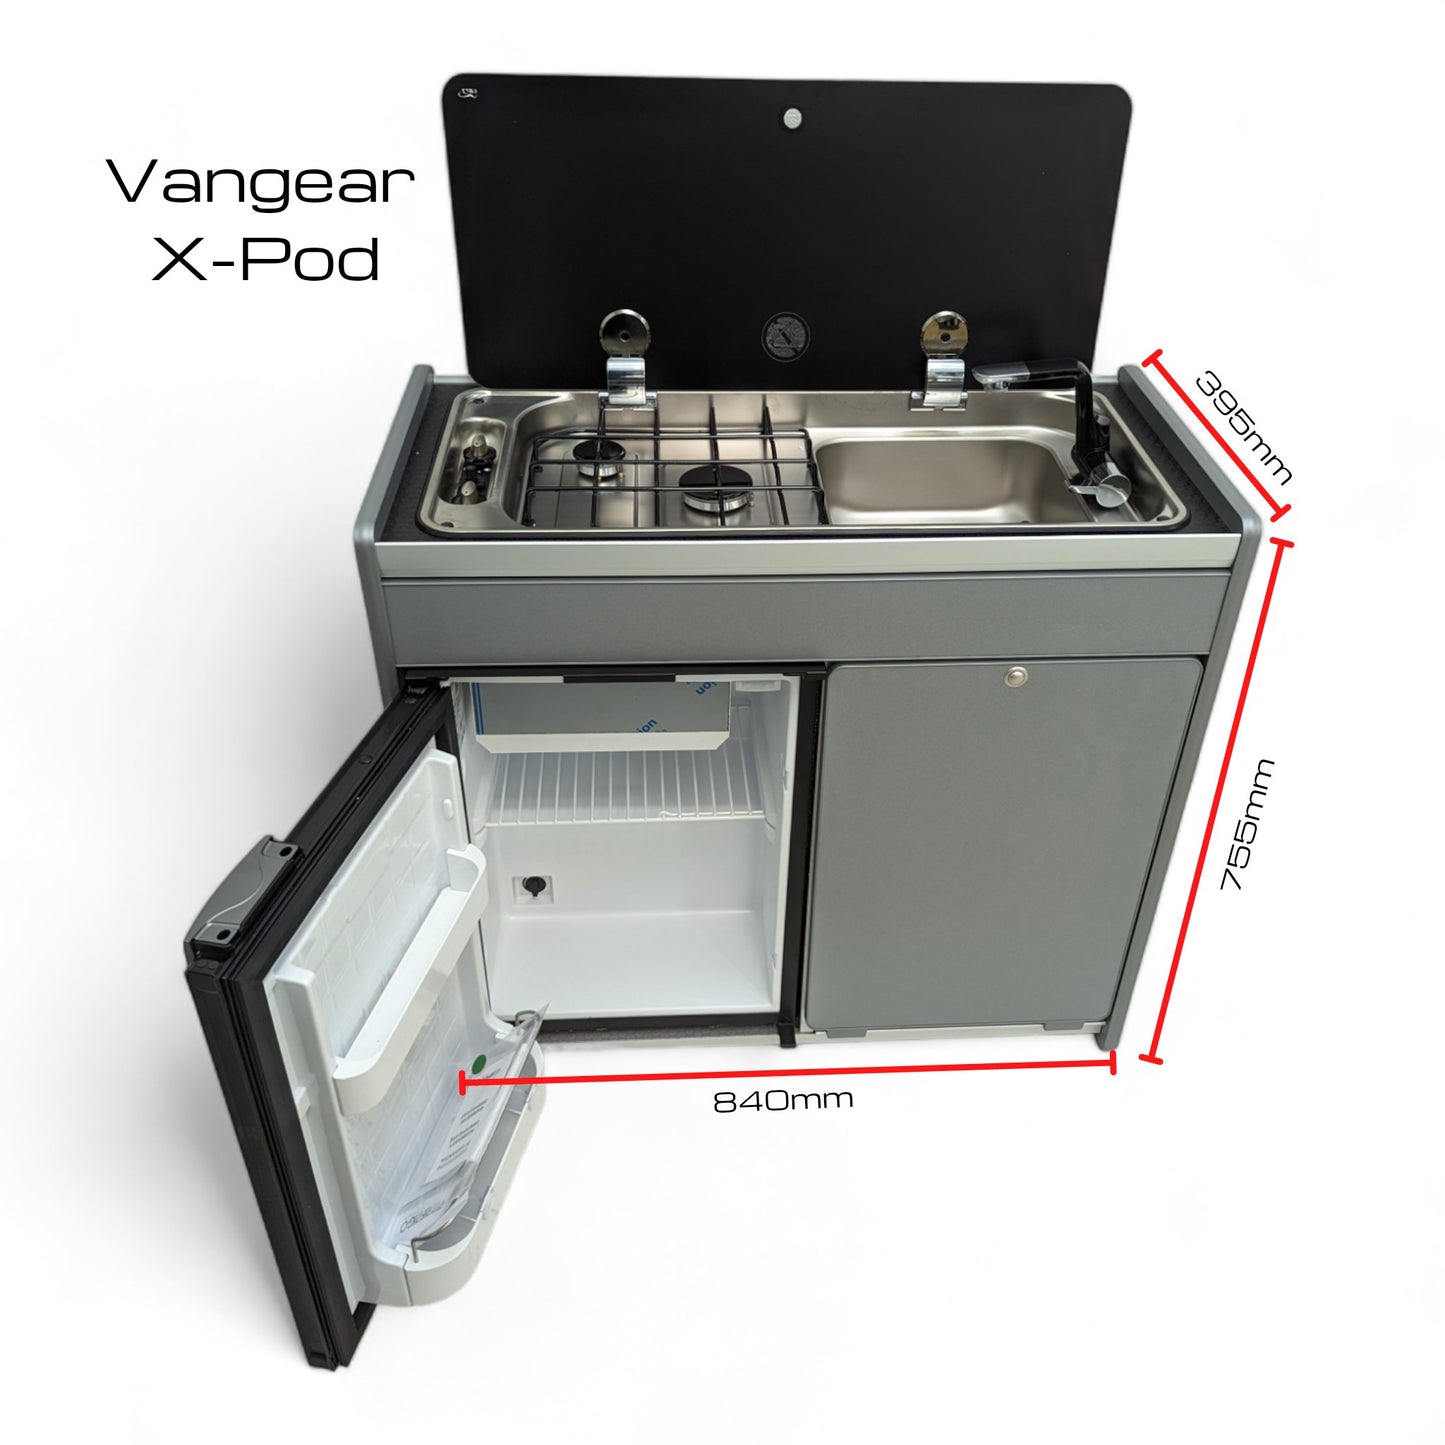 Vangear X - Pod (Gen2.2) Campervan kitchen (Black) - Vangear UK